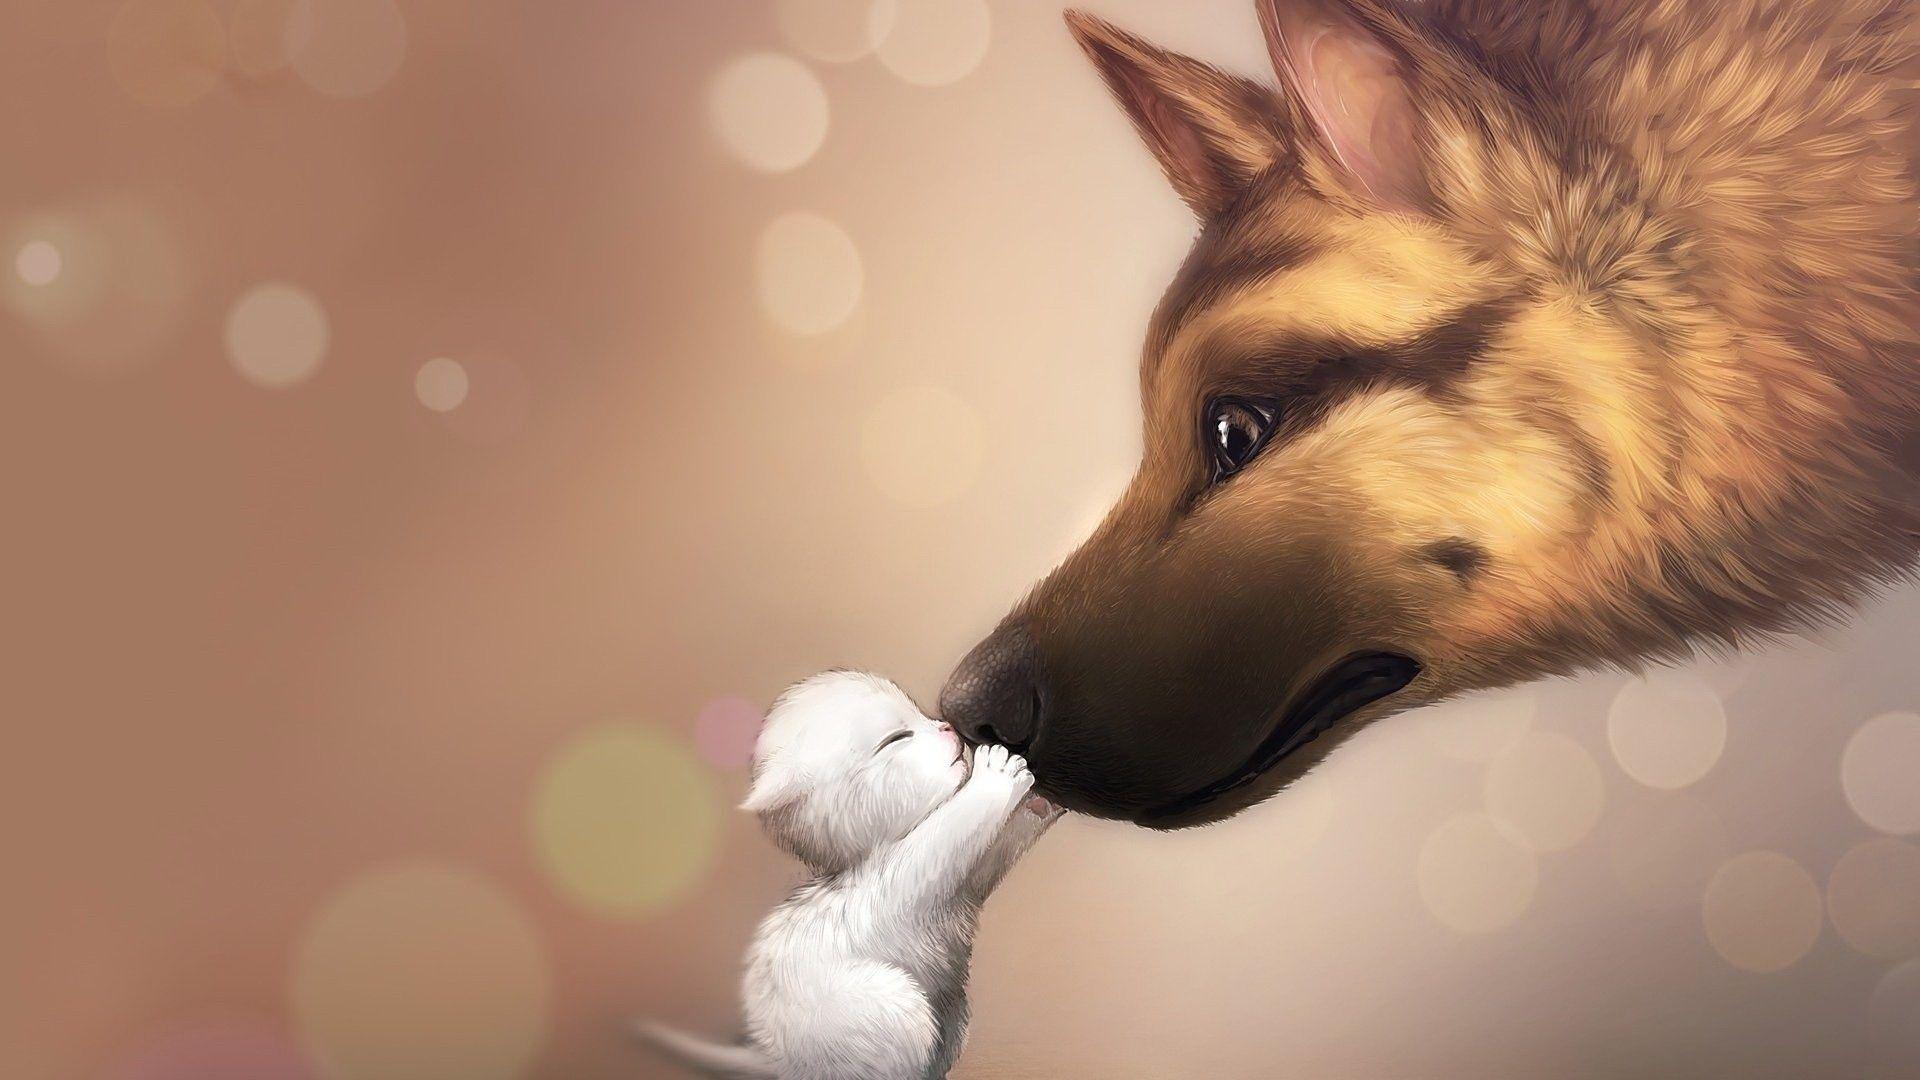 Cute Cartoon Dog Wallpapers - Top Free Cute Cartoon Dog Backgrounds